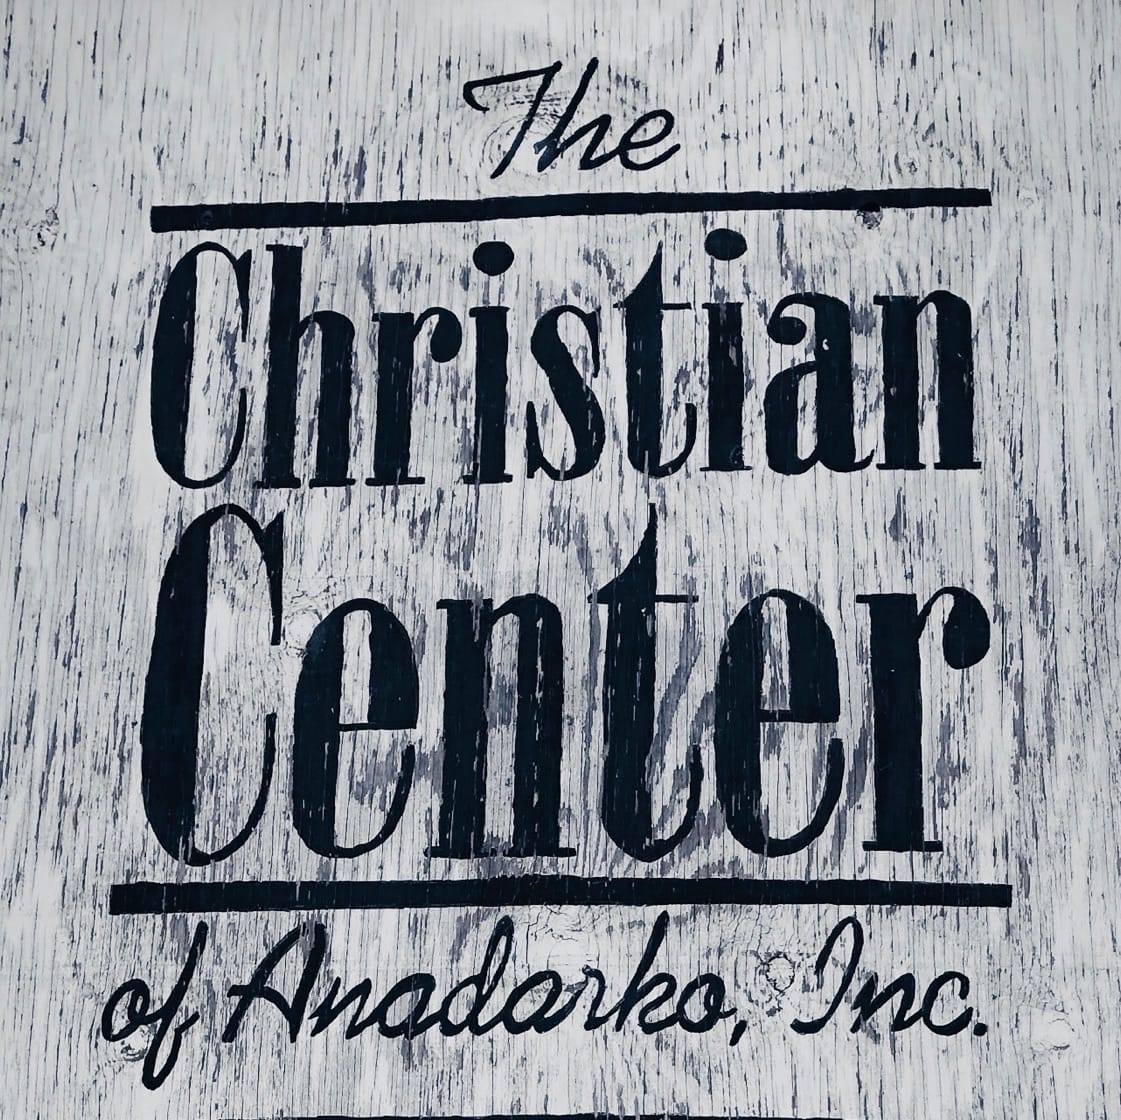 The Christian Center of Anadarko